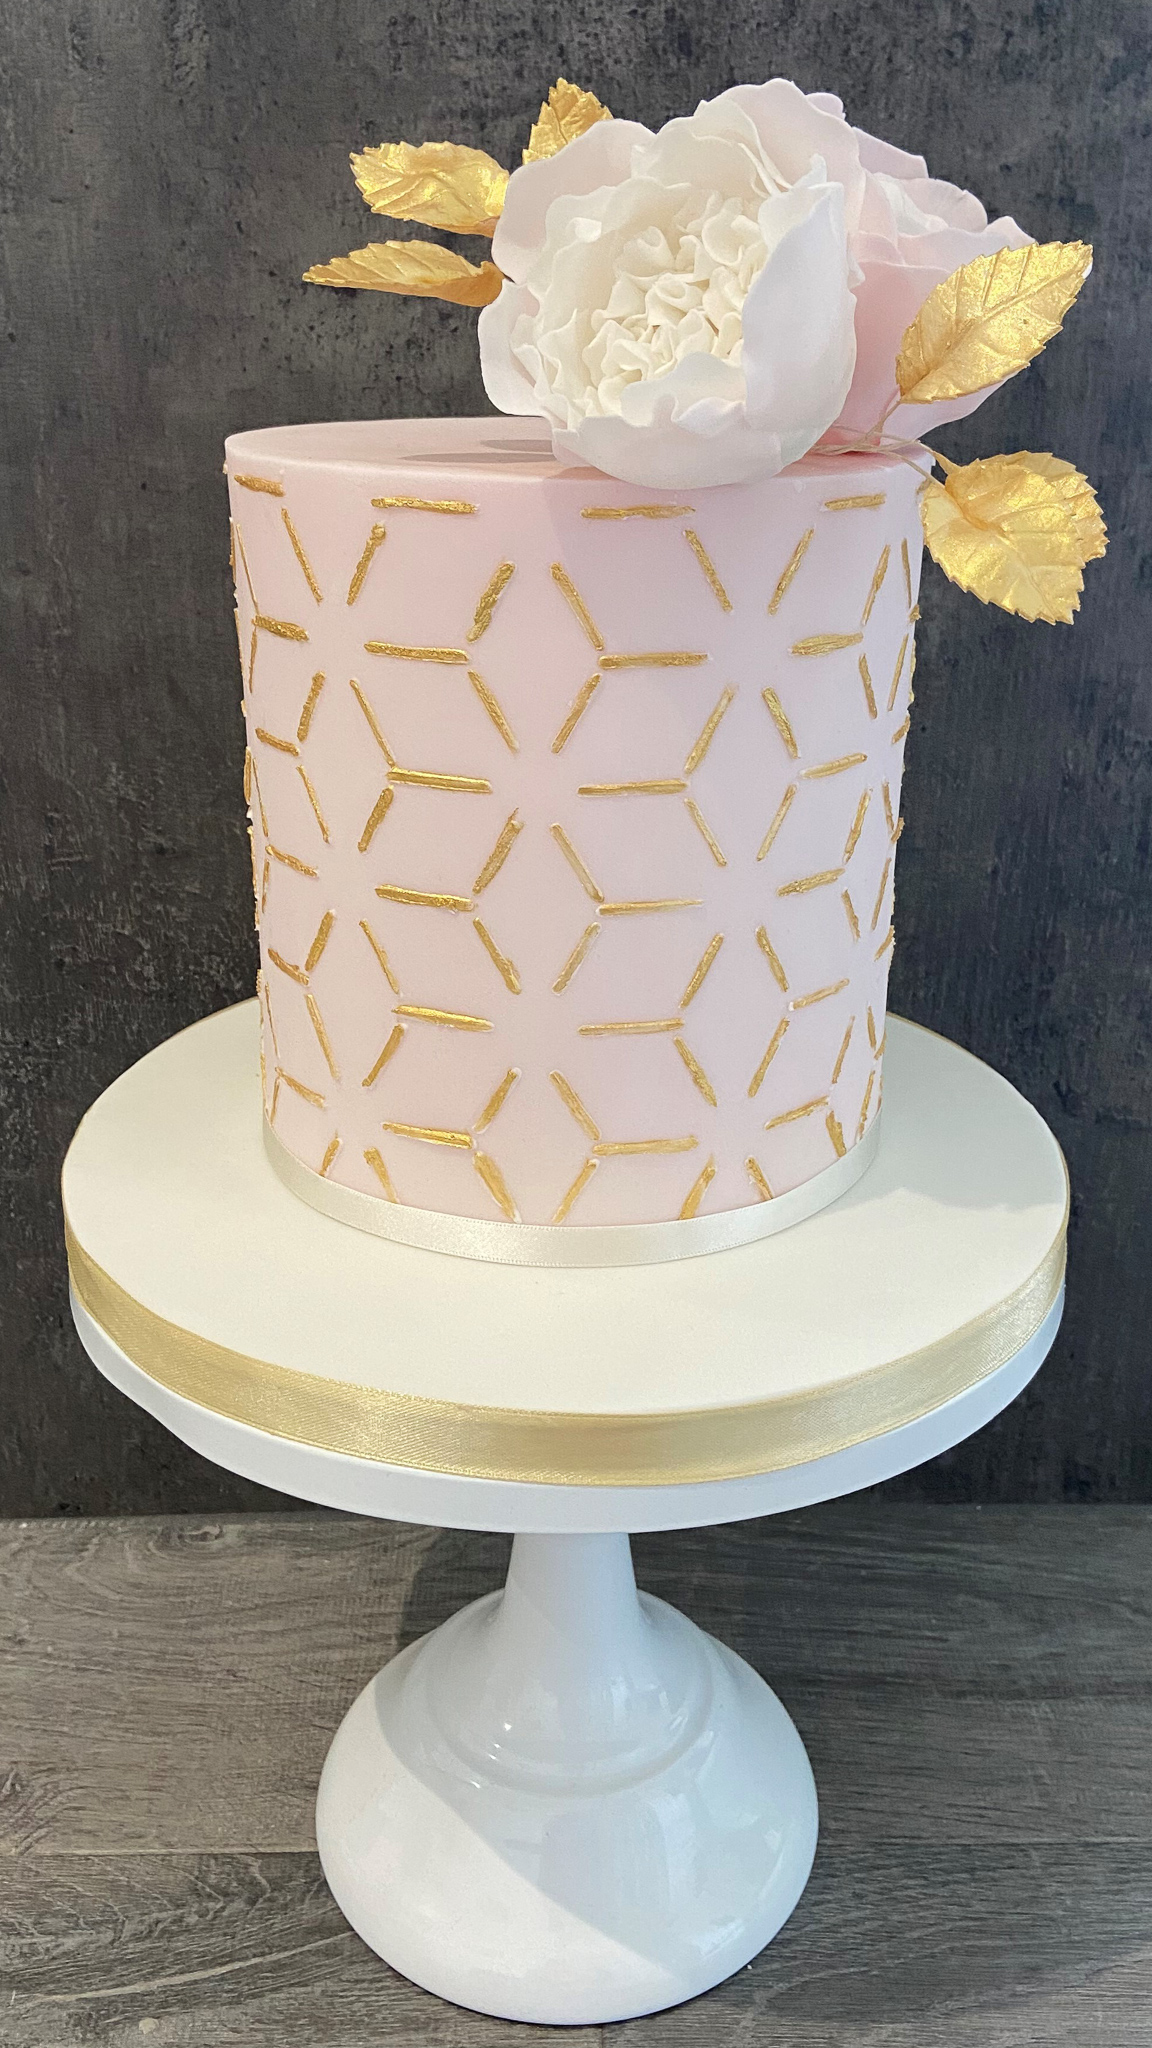 Stylish tall Birthday cake with sugar flowers